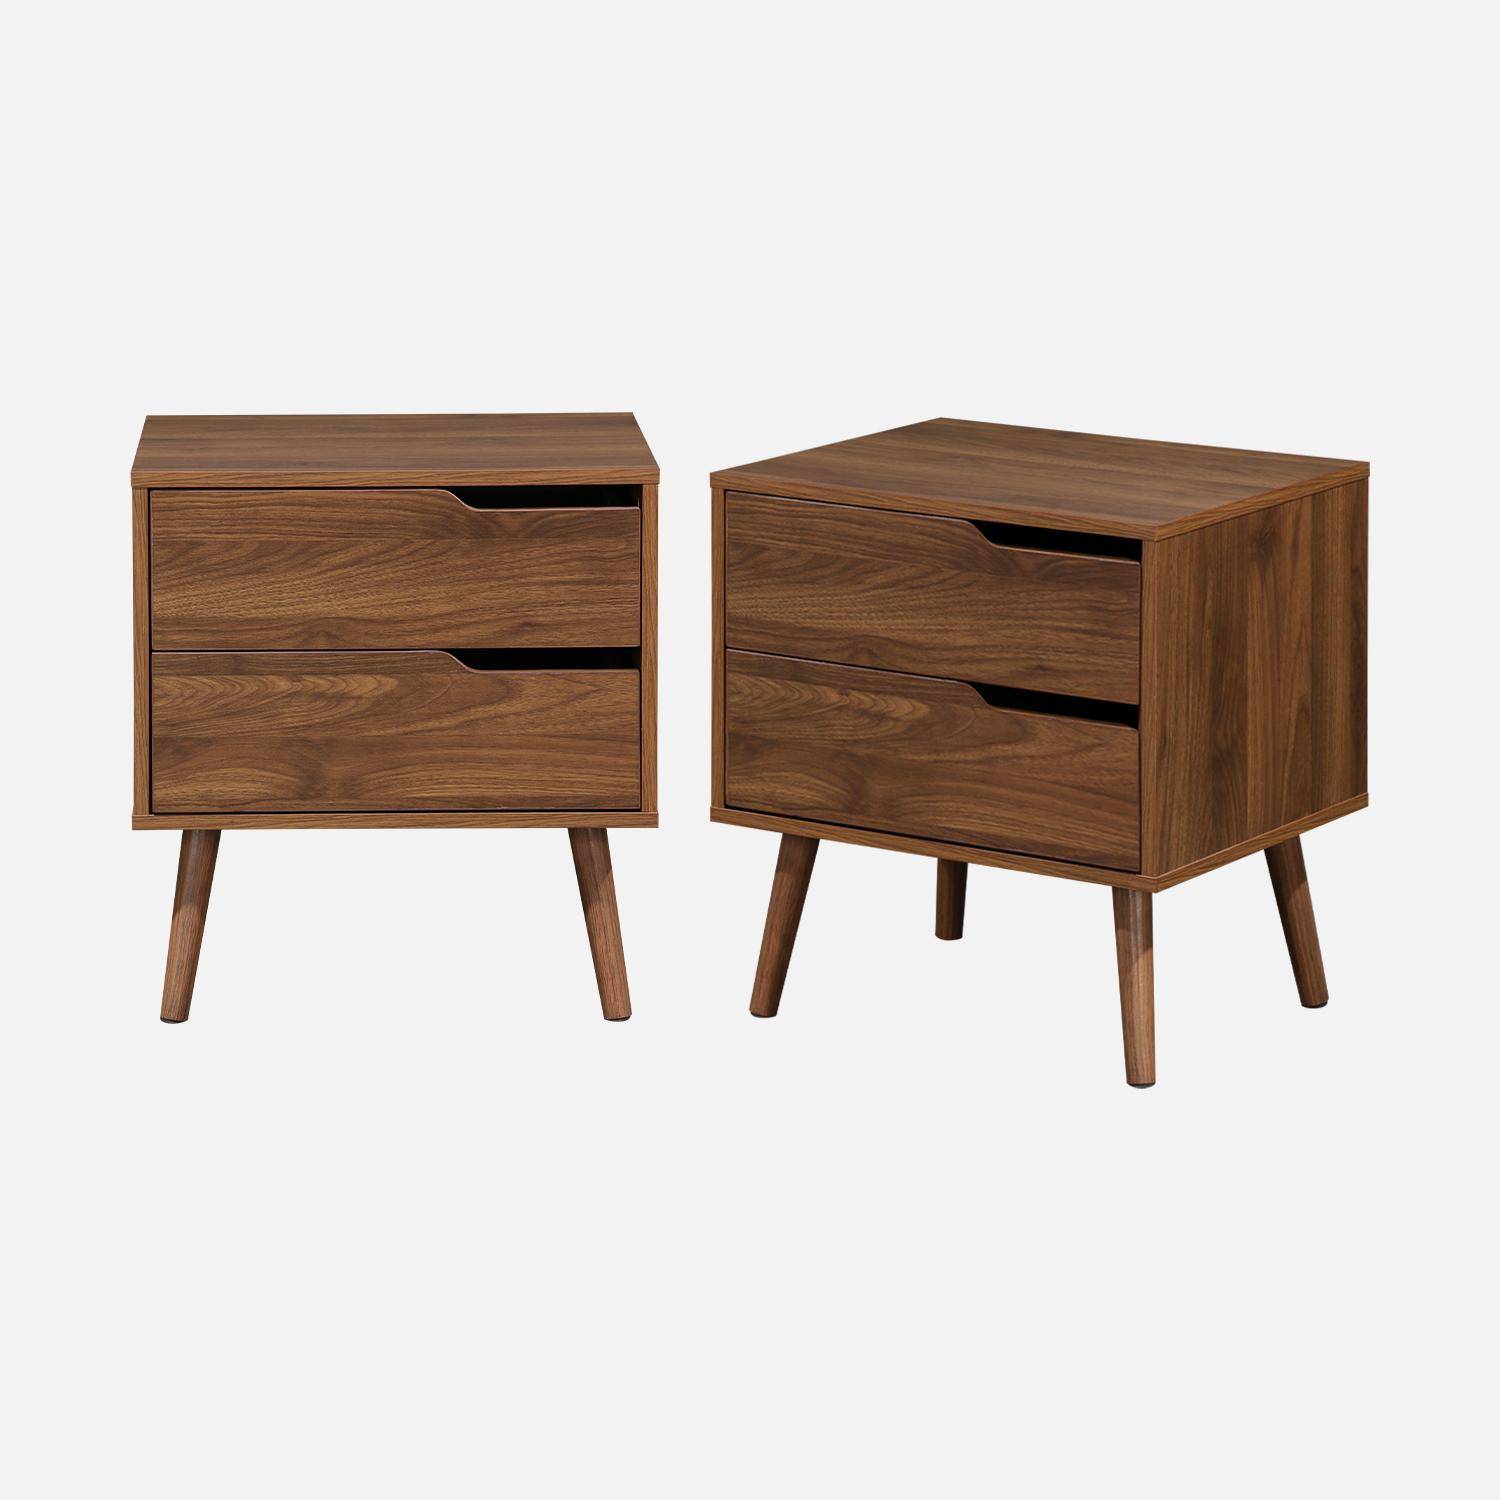 Pair of walnut wood-effect bedside tables, 50x40x55cm, Nepal, 2 drawers,sweeek,Photo4